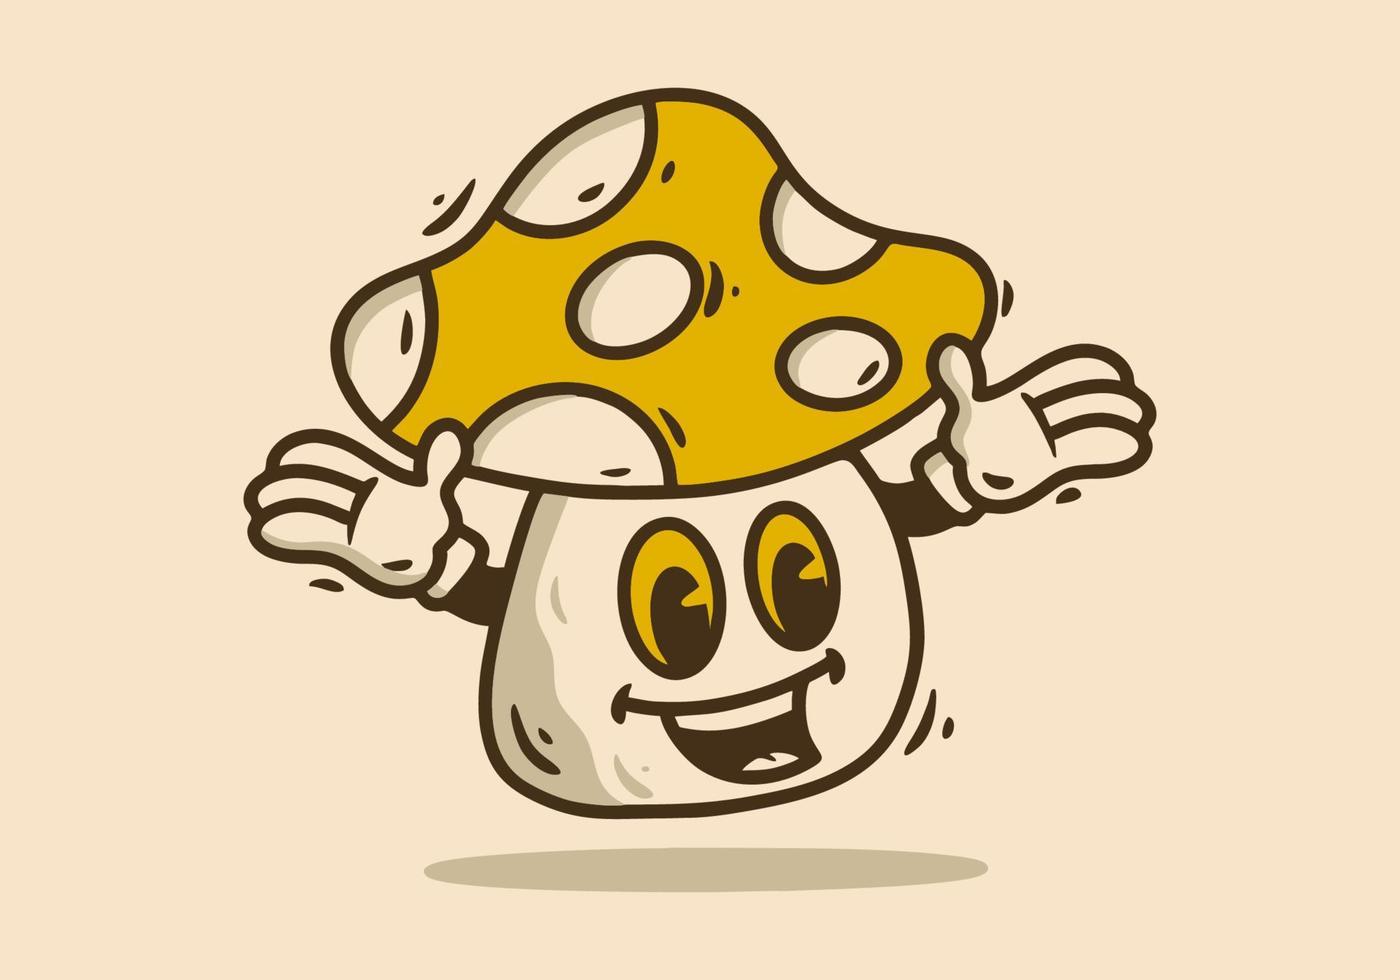 Illustration character design of yellow mushroom vector